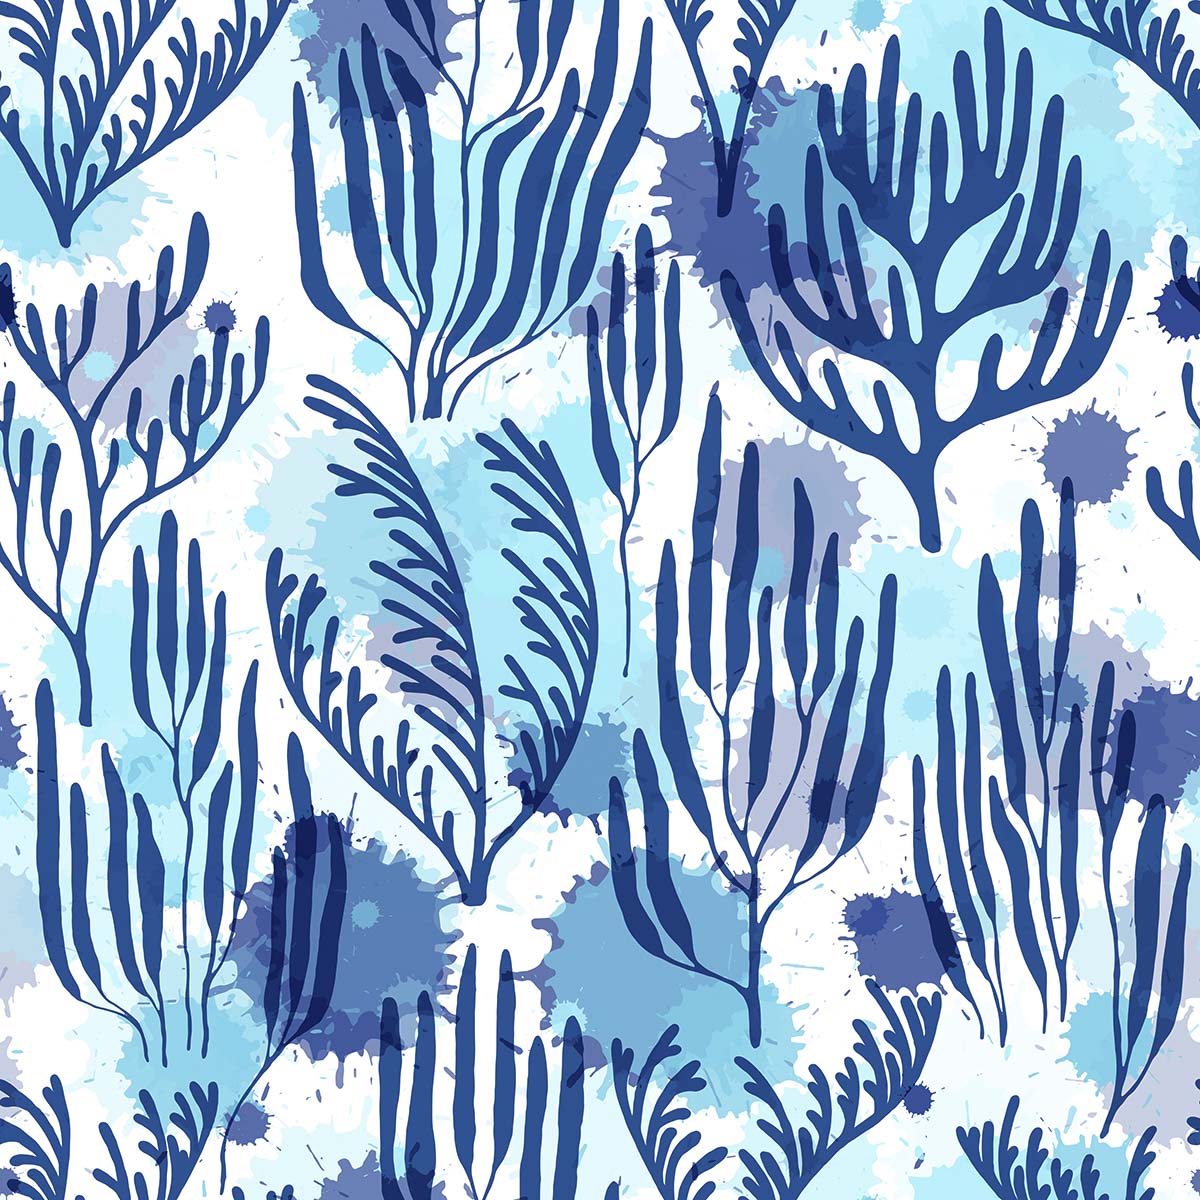 A pattern of blue plants